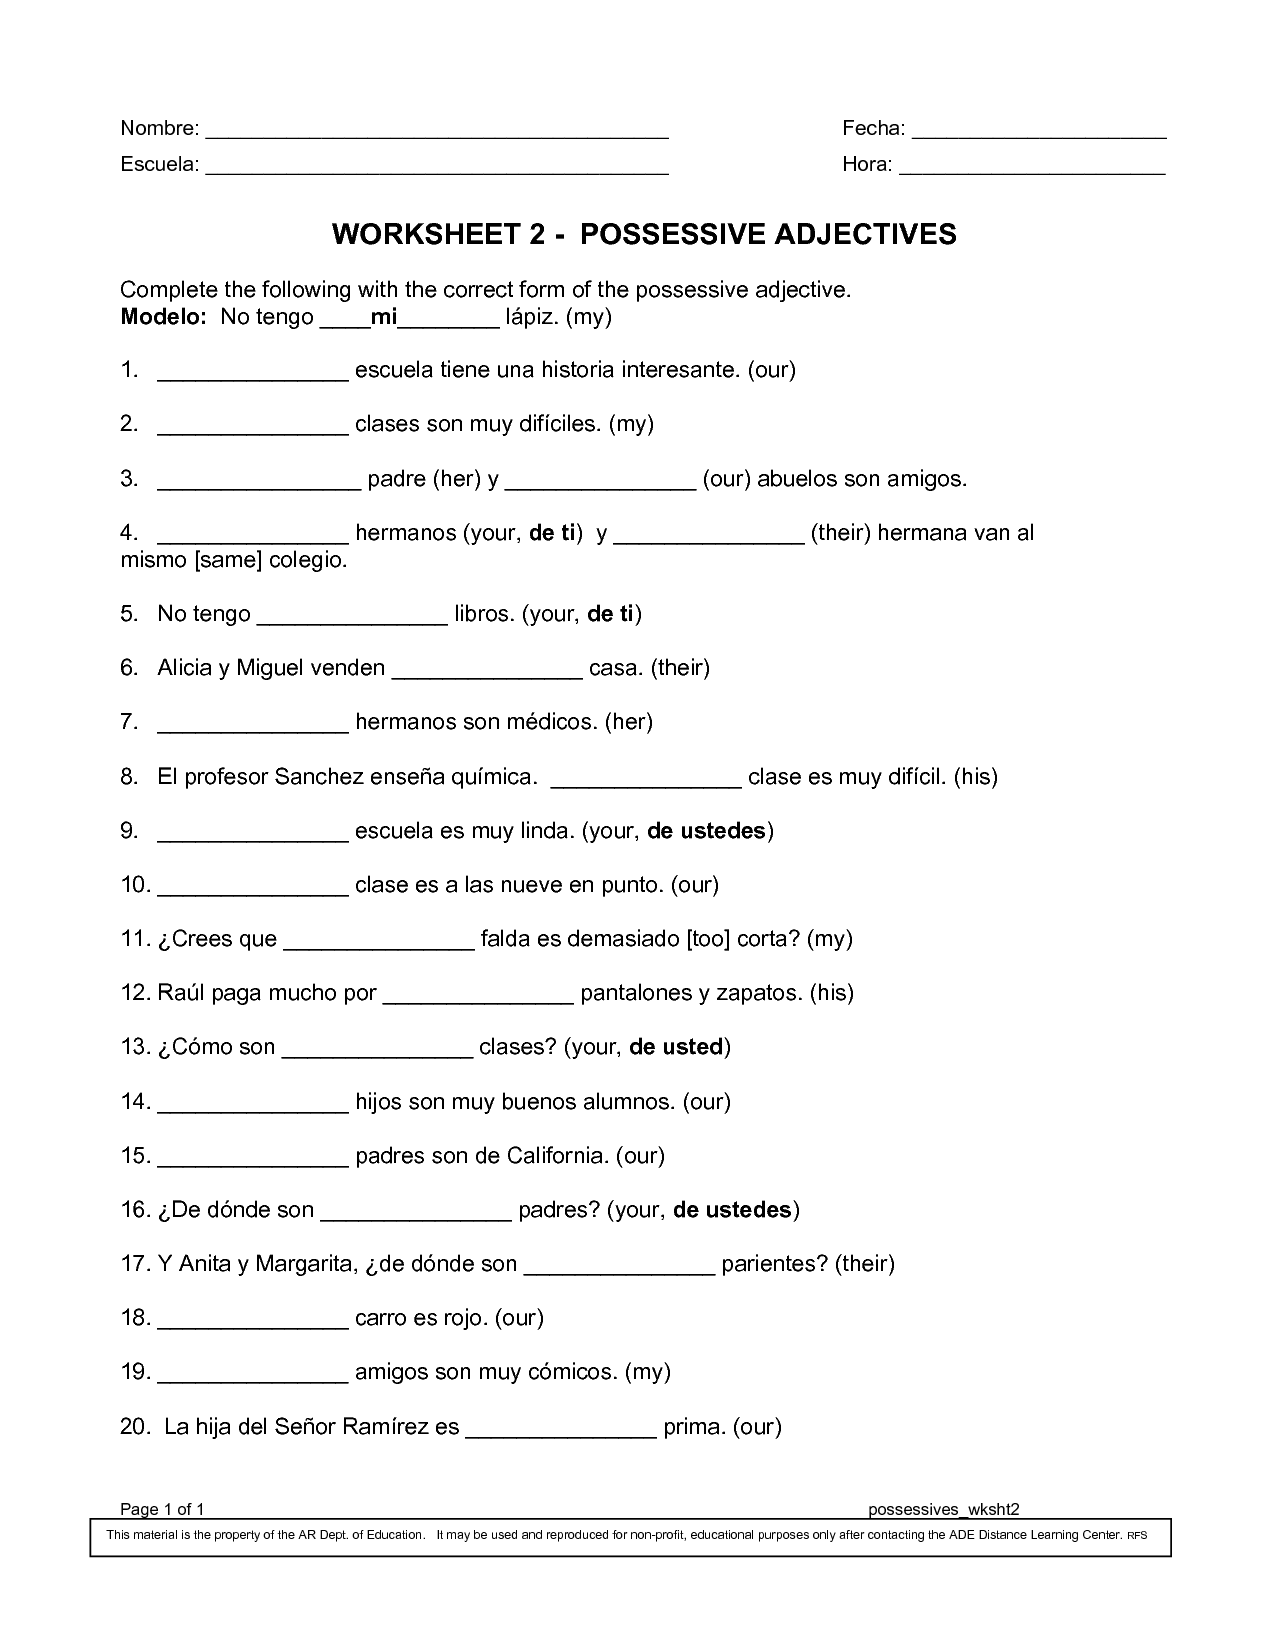 possessive-adjectives-pronouns-worksheet-driverlayer-search-engine